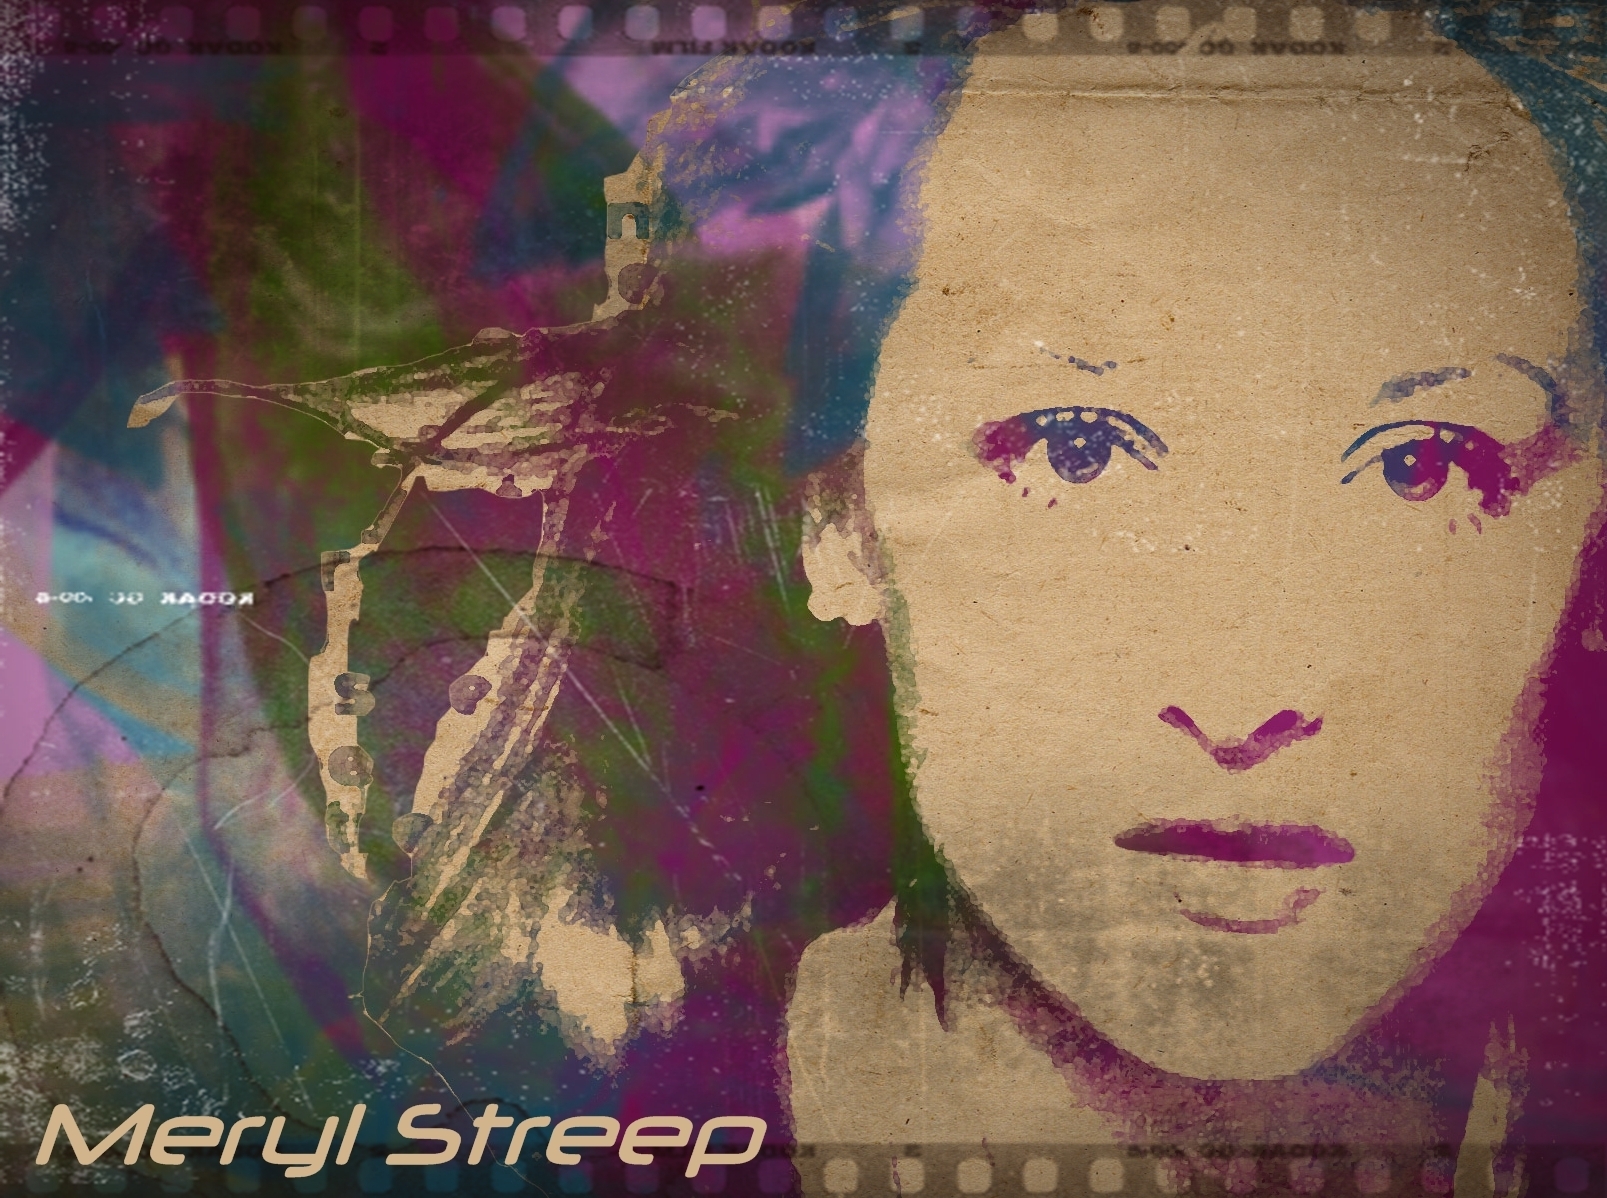 Meryl Streep - Images Gallery